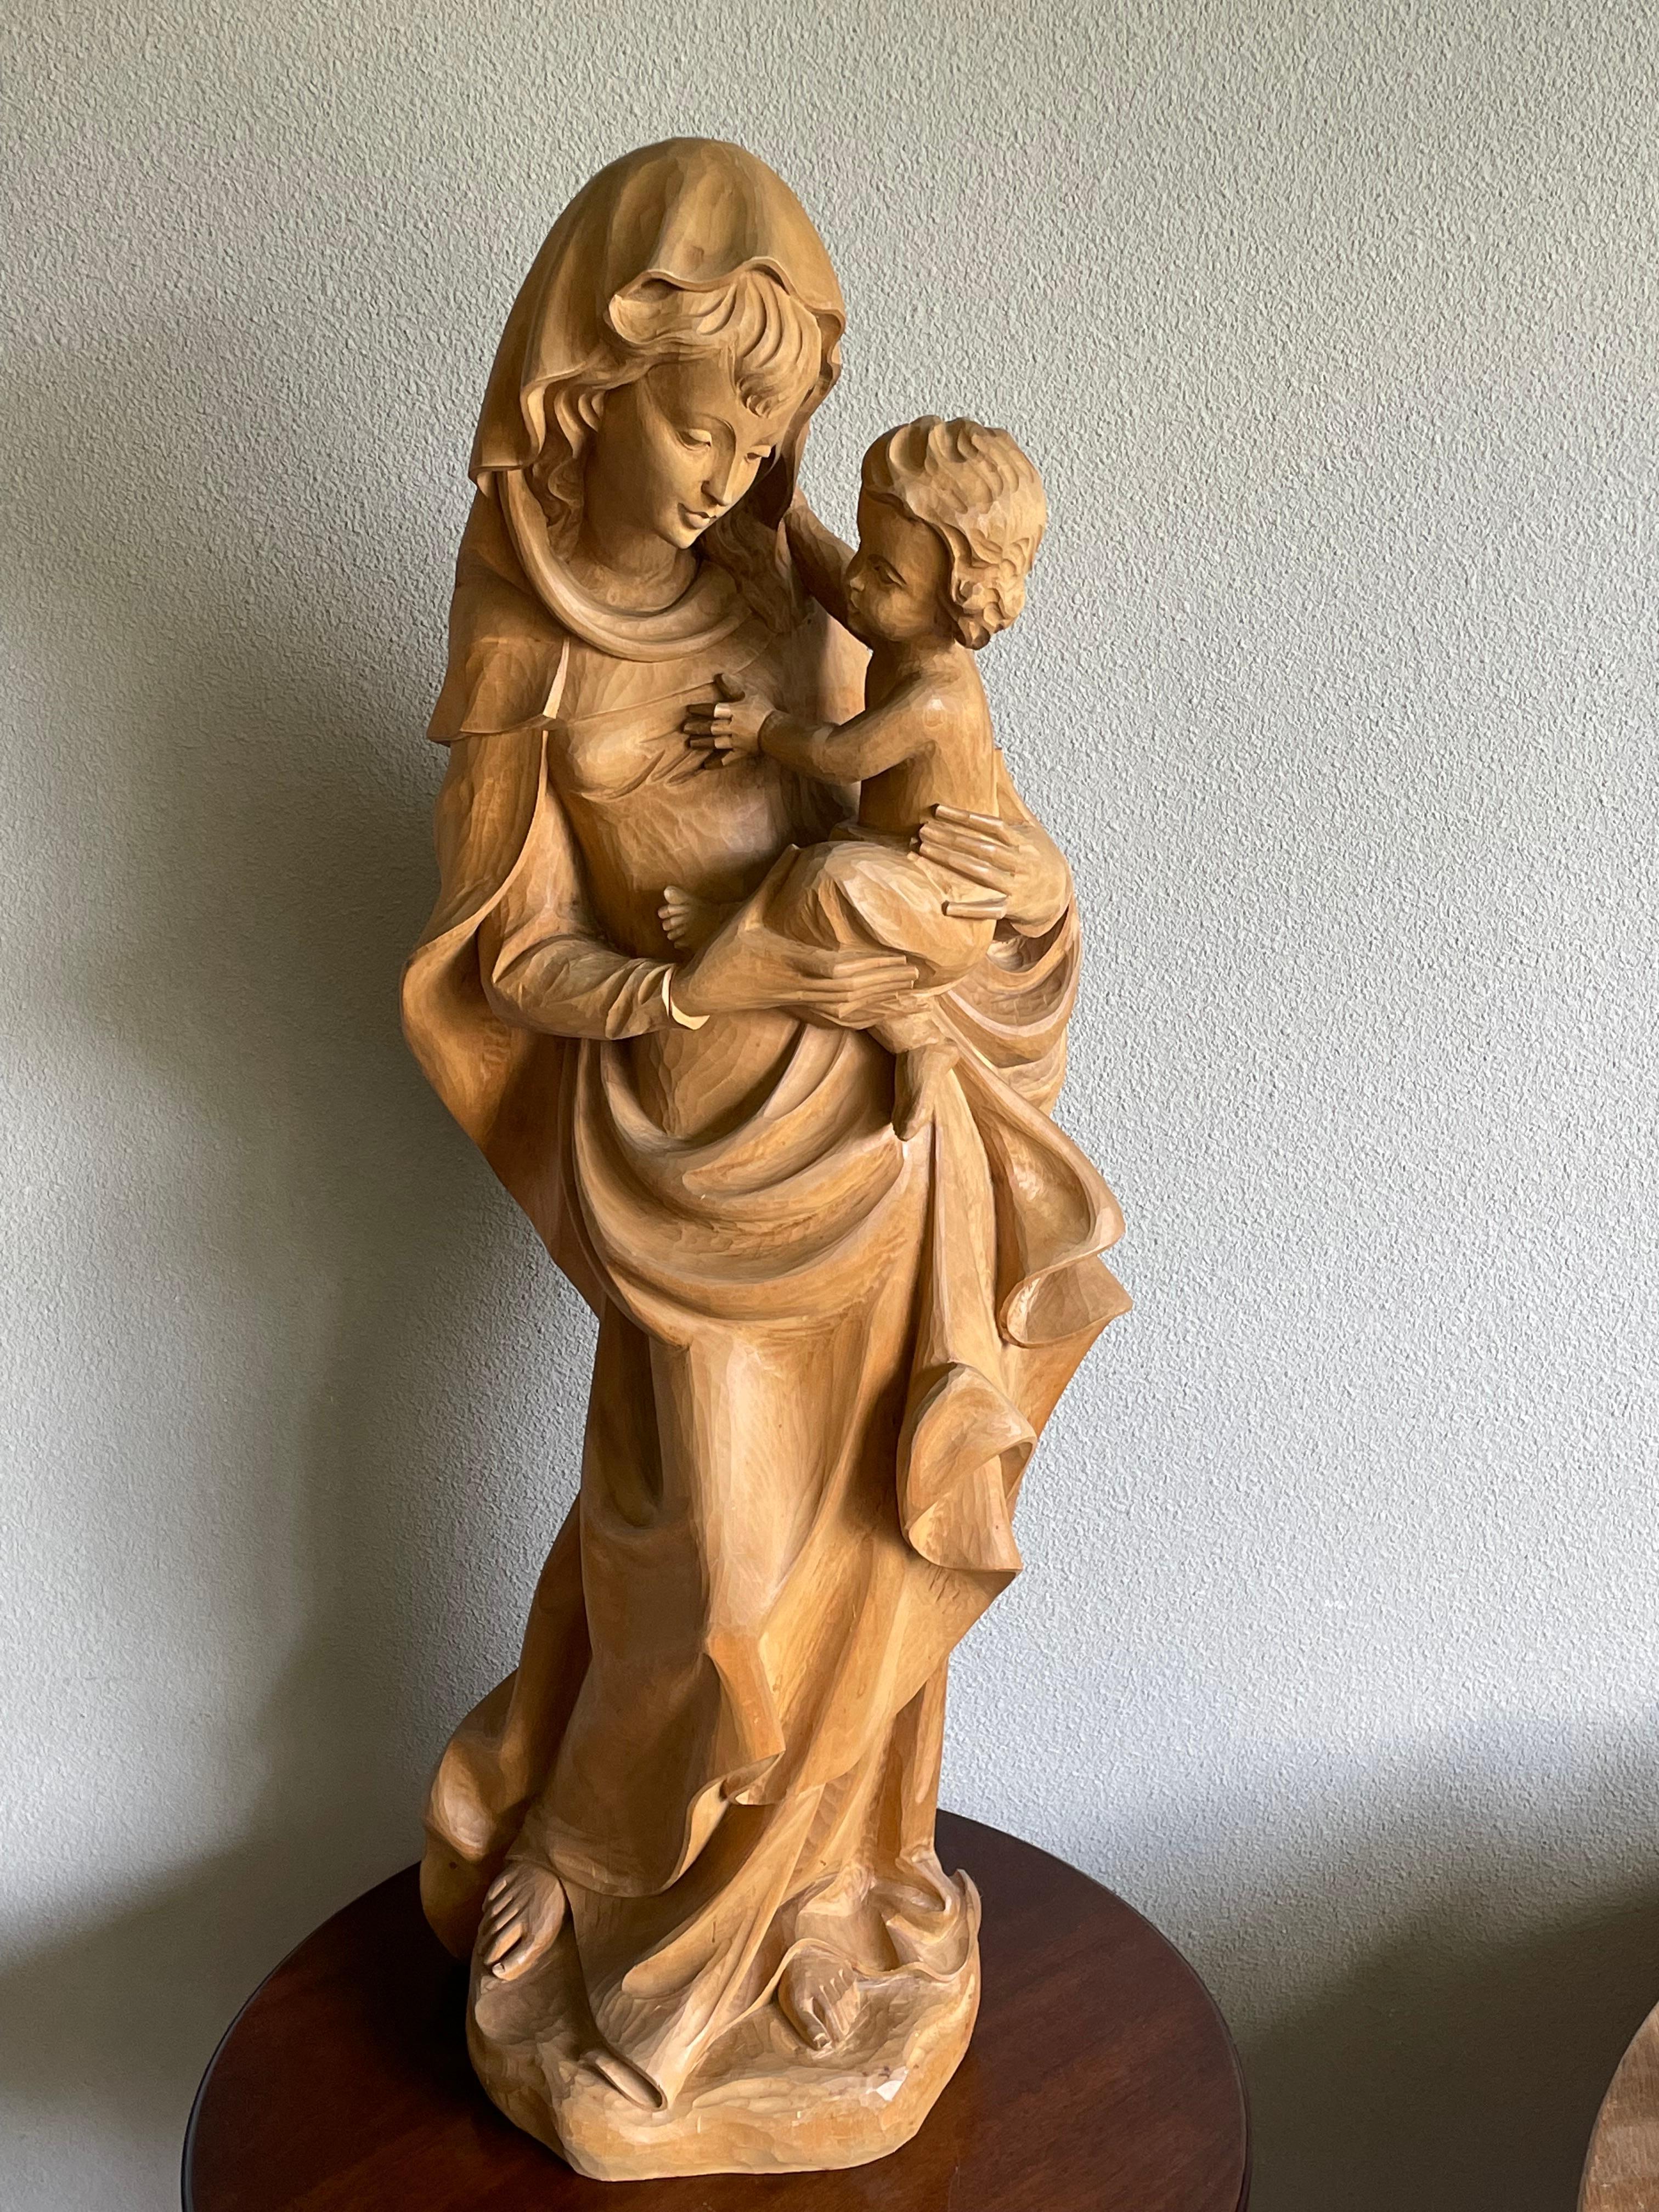 Large Jugendstil Style Hand Carved Wooden Sculpture of Mary and Child Jesus For Sale 1